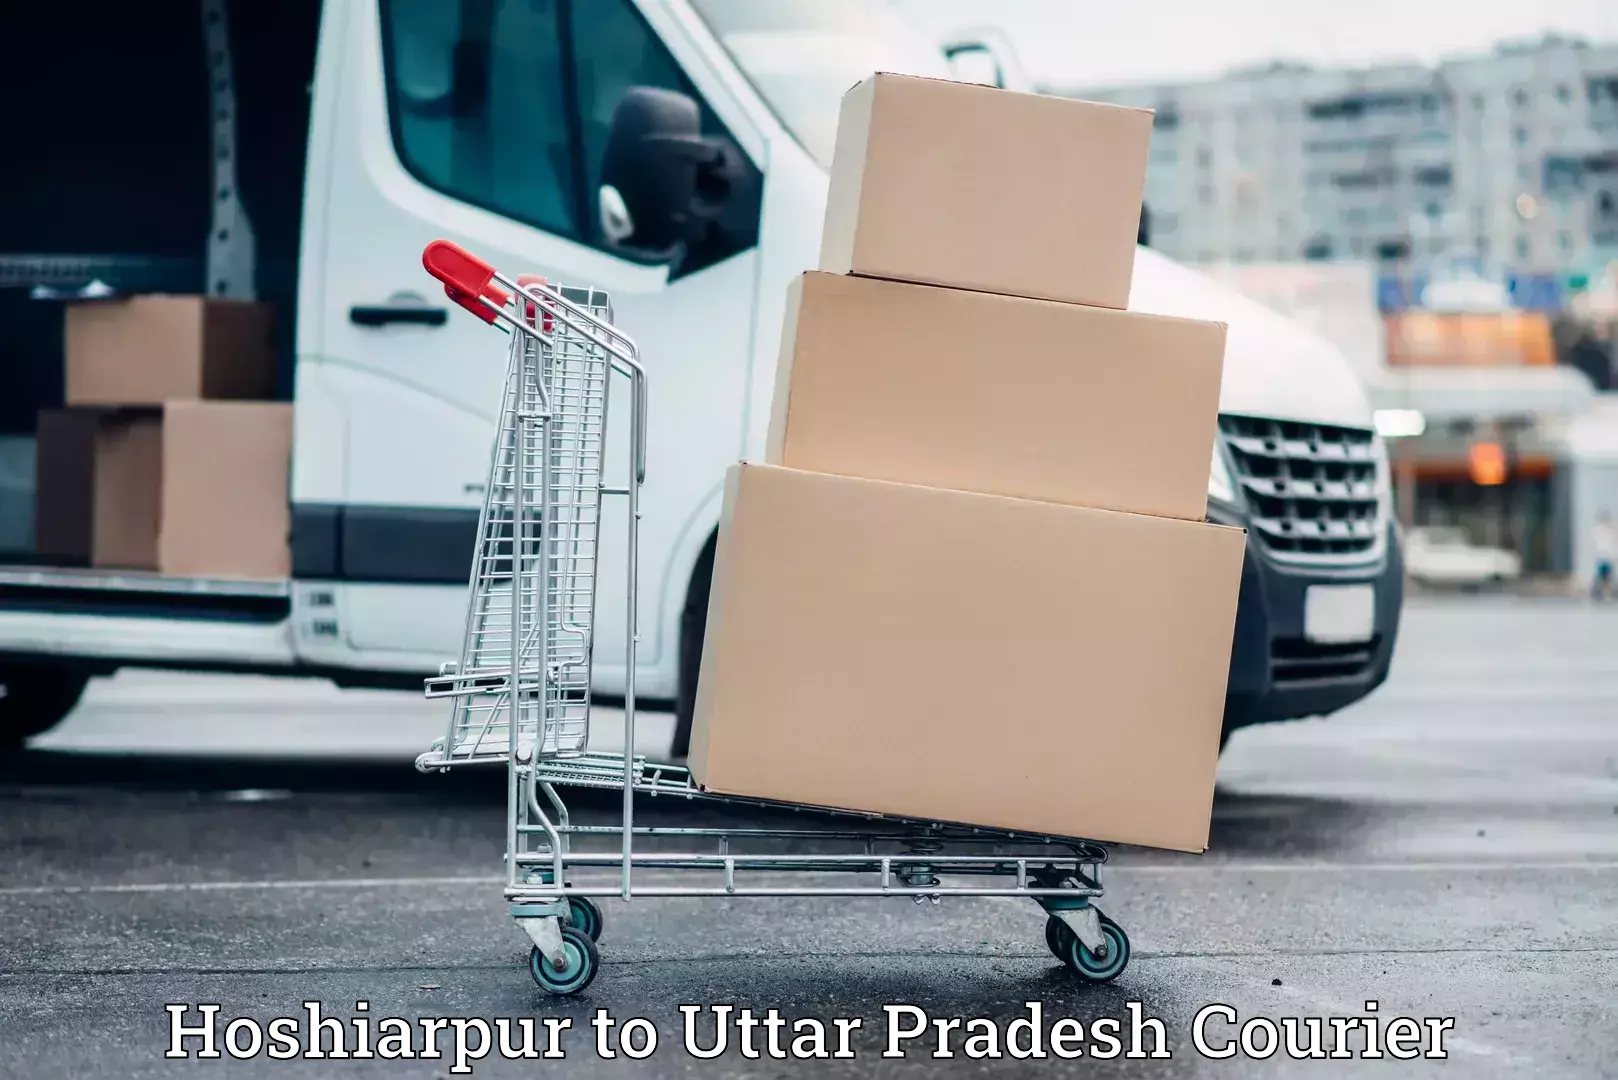 Furniture relocation experts Hoshiarpur to Uttar Pradesh